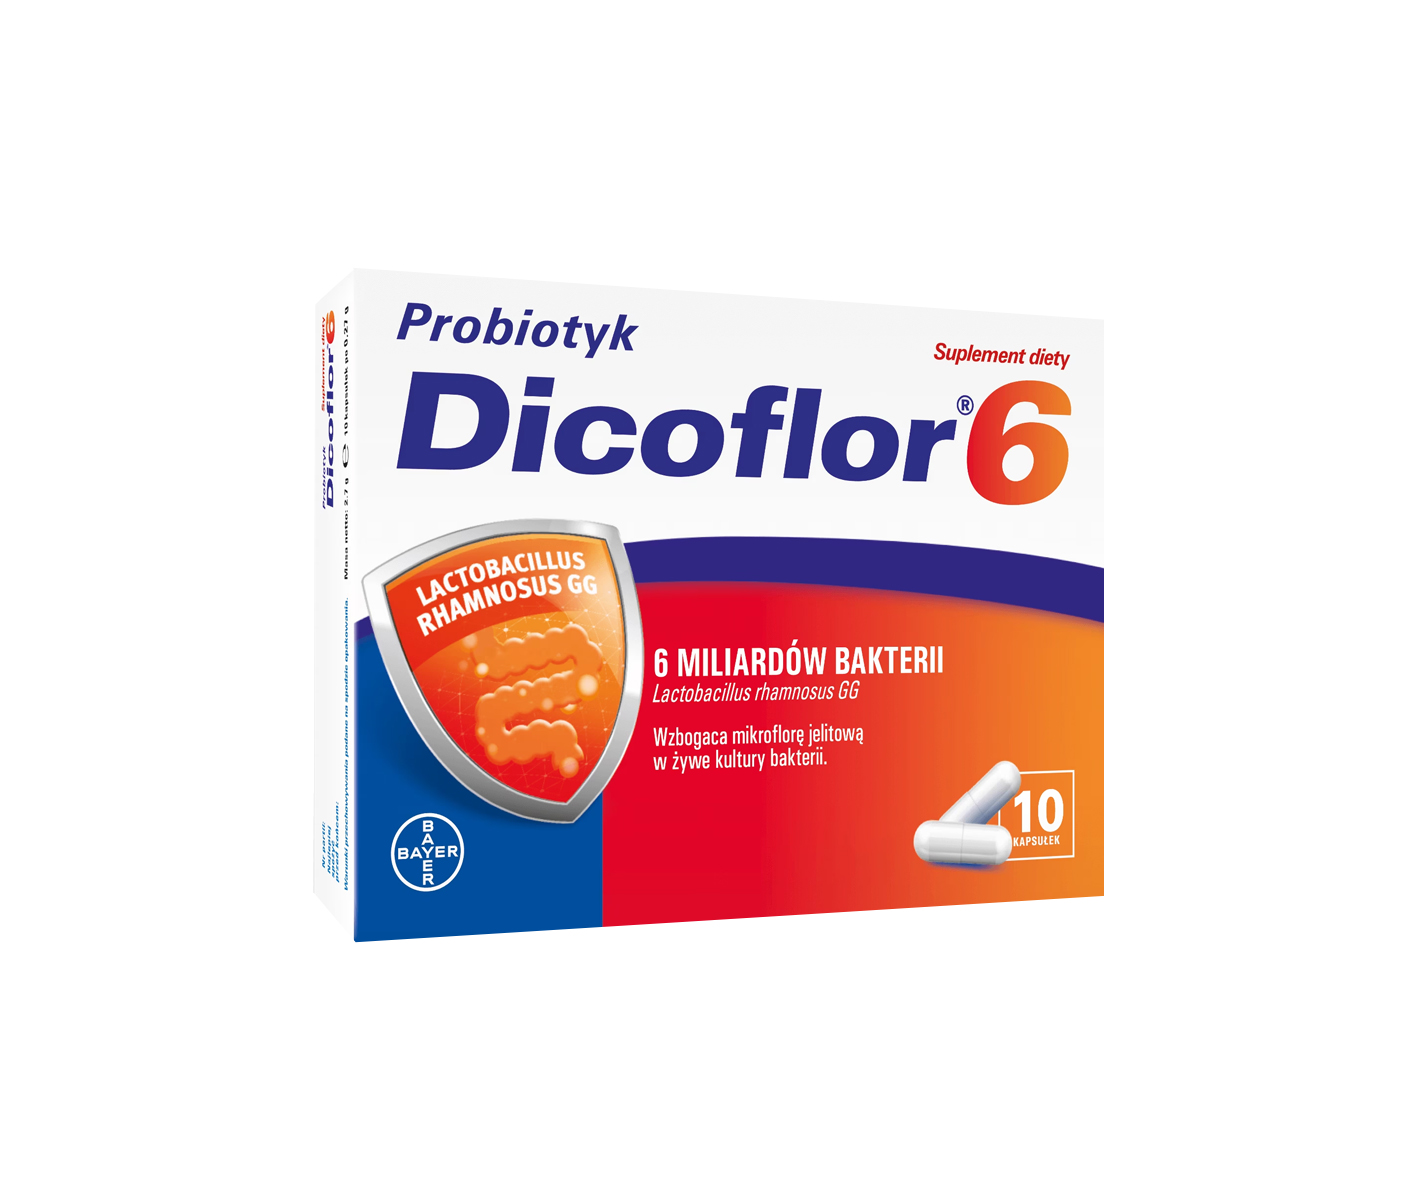 Dicoflor 6, supliment alimentar, probiotic